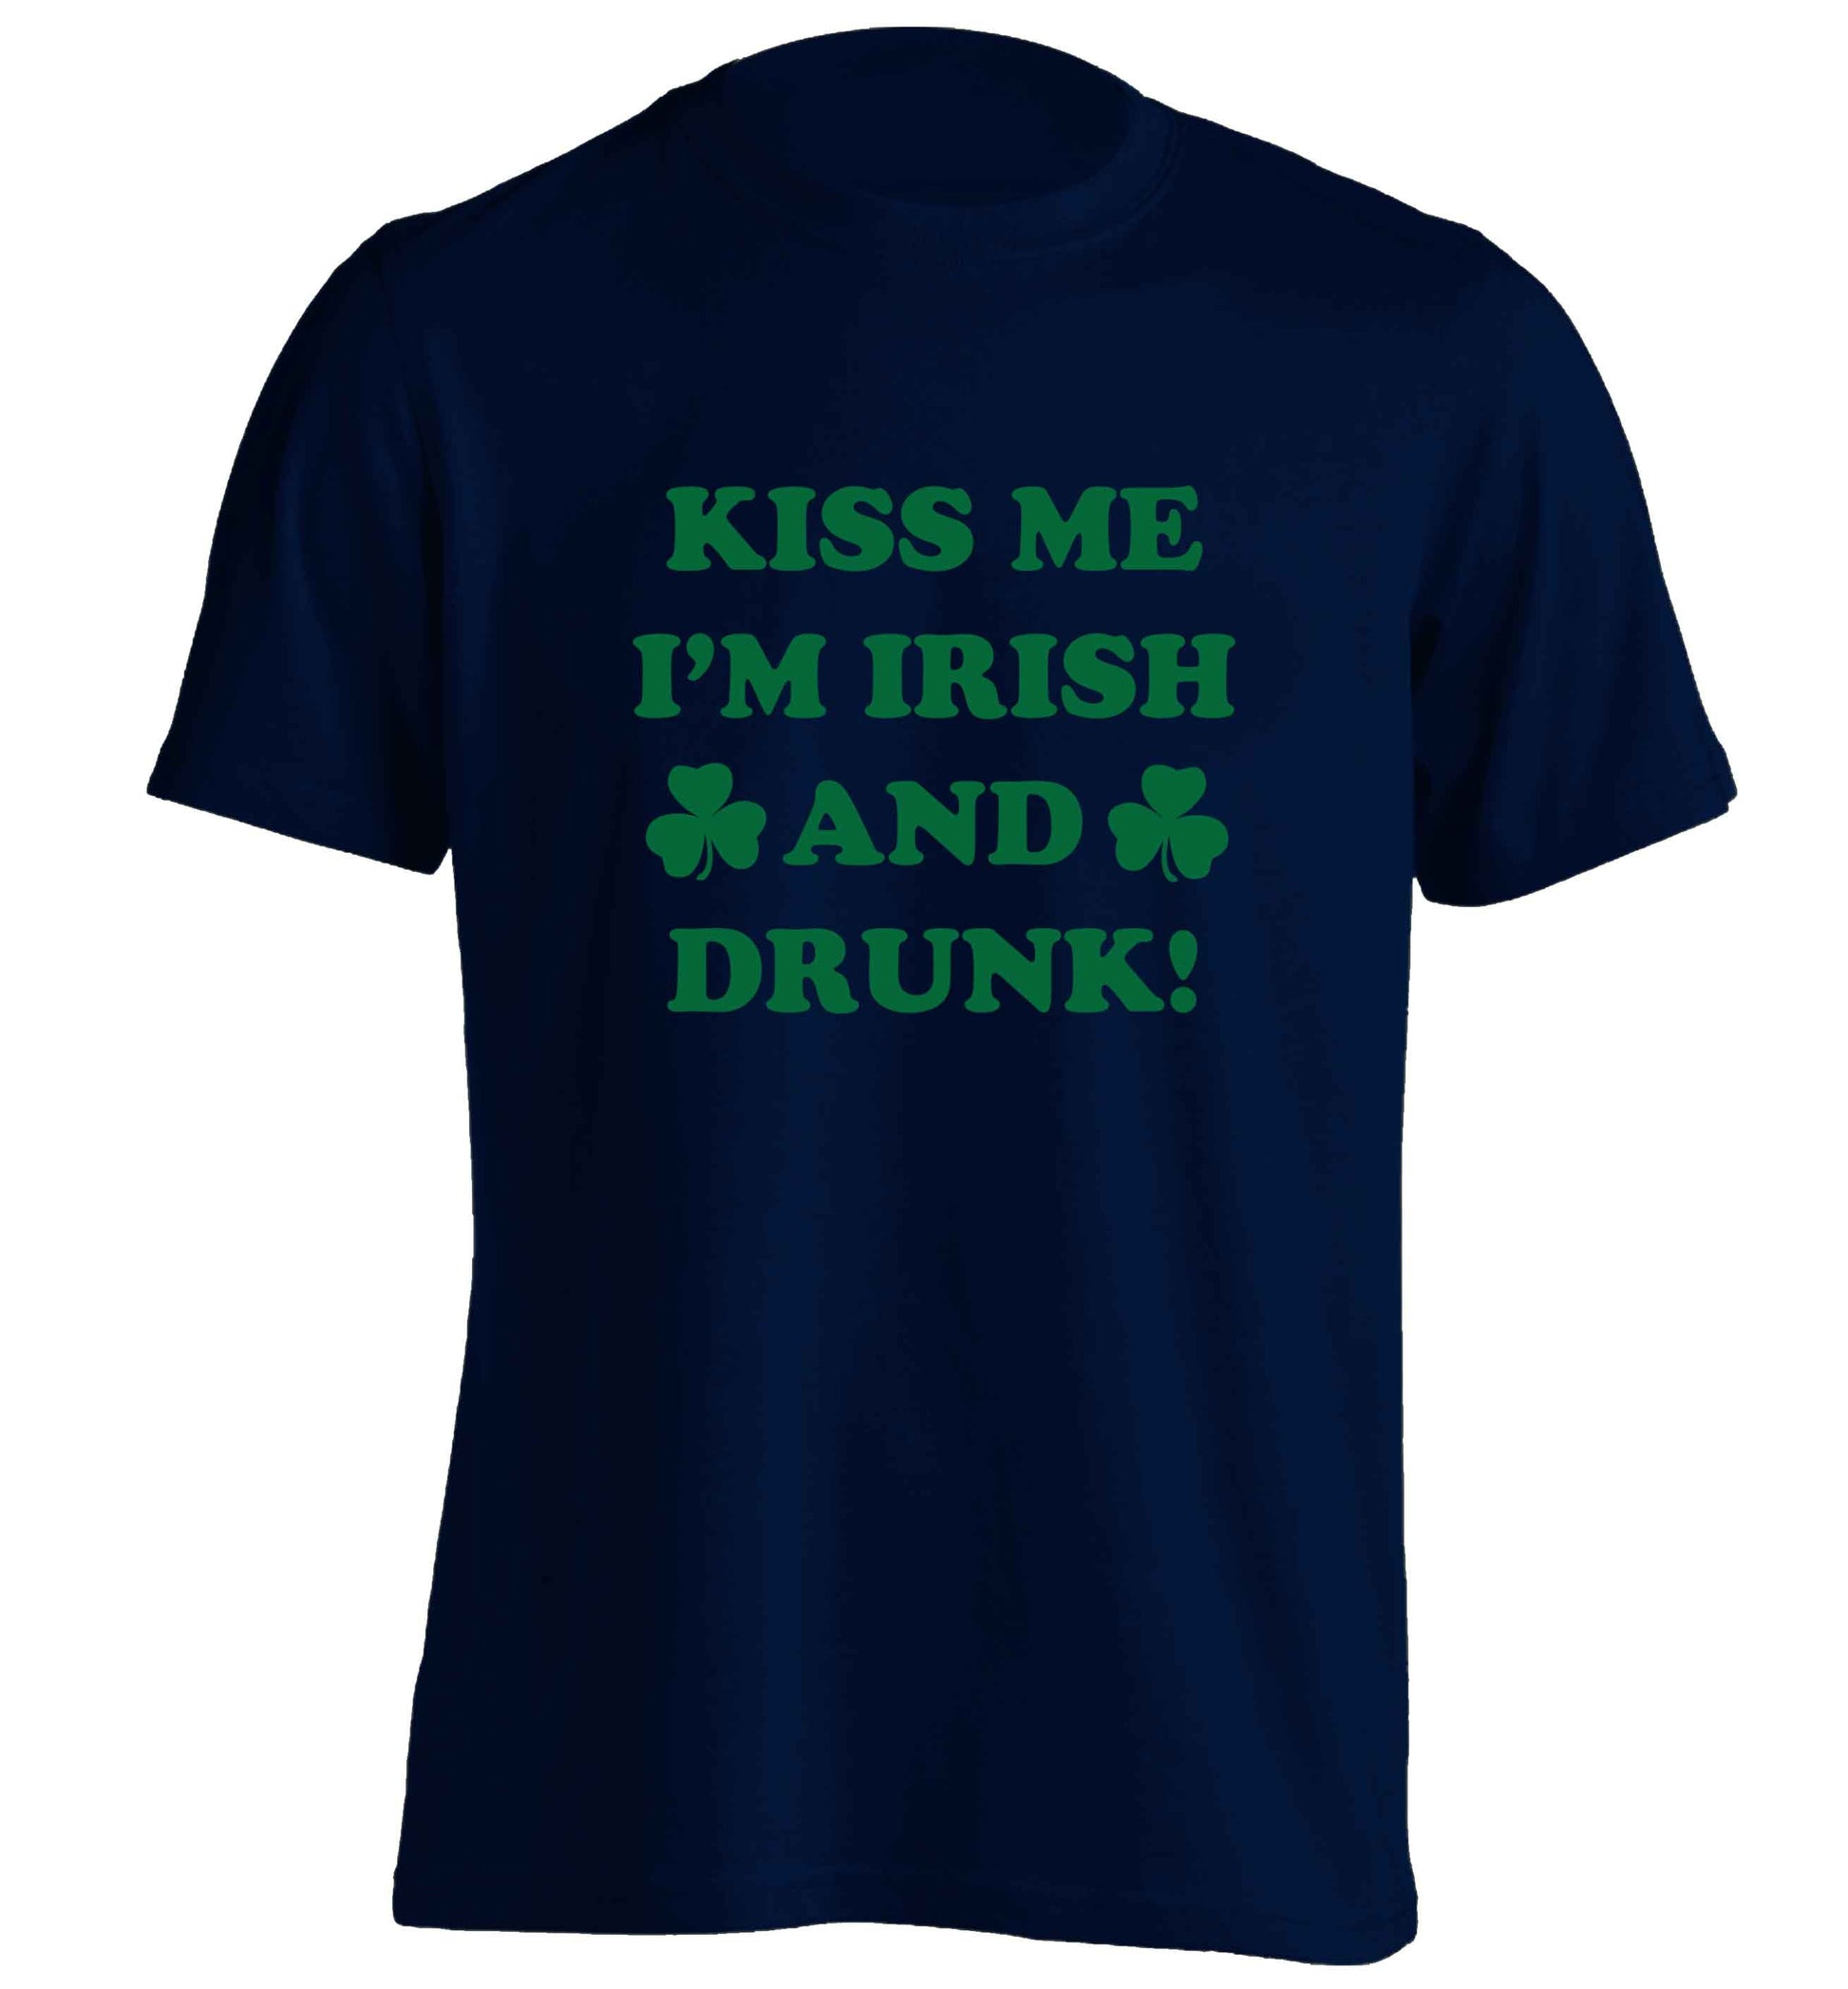 Kiss me I'm Irish and drunk adults unisex navy Tshirt 2XL